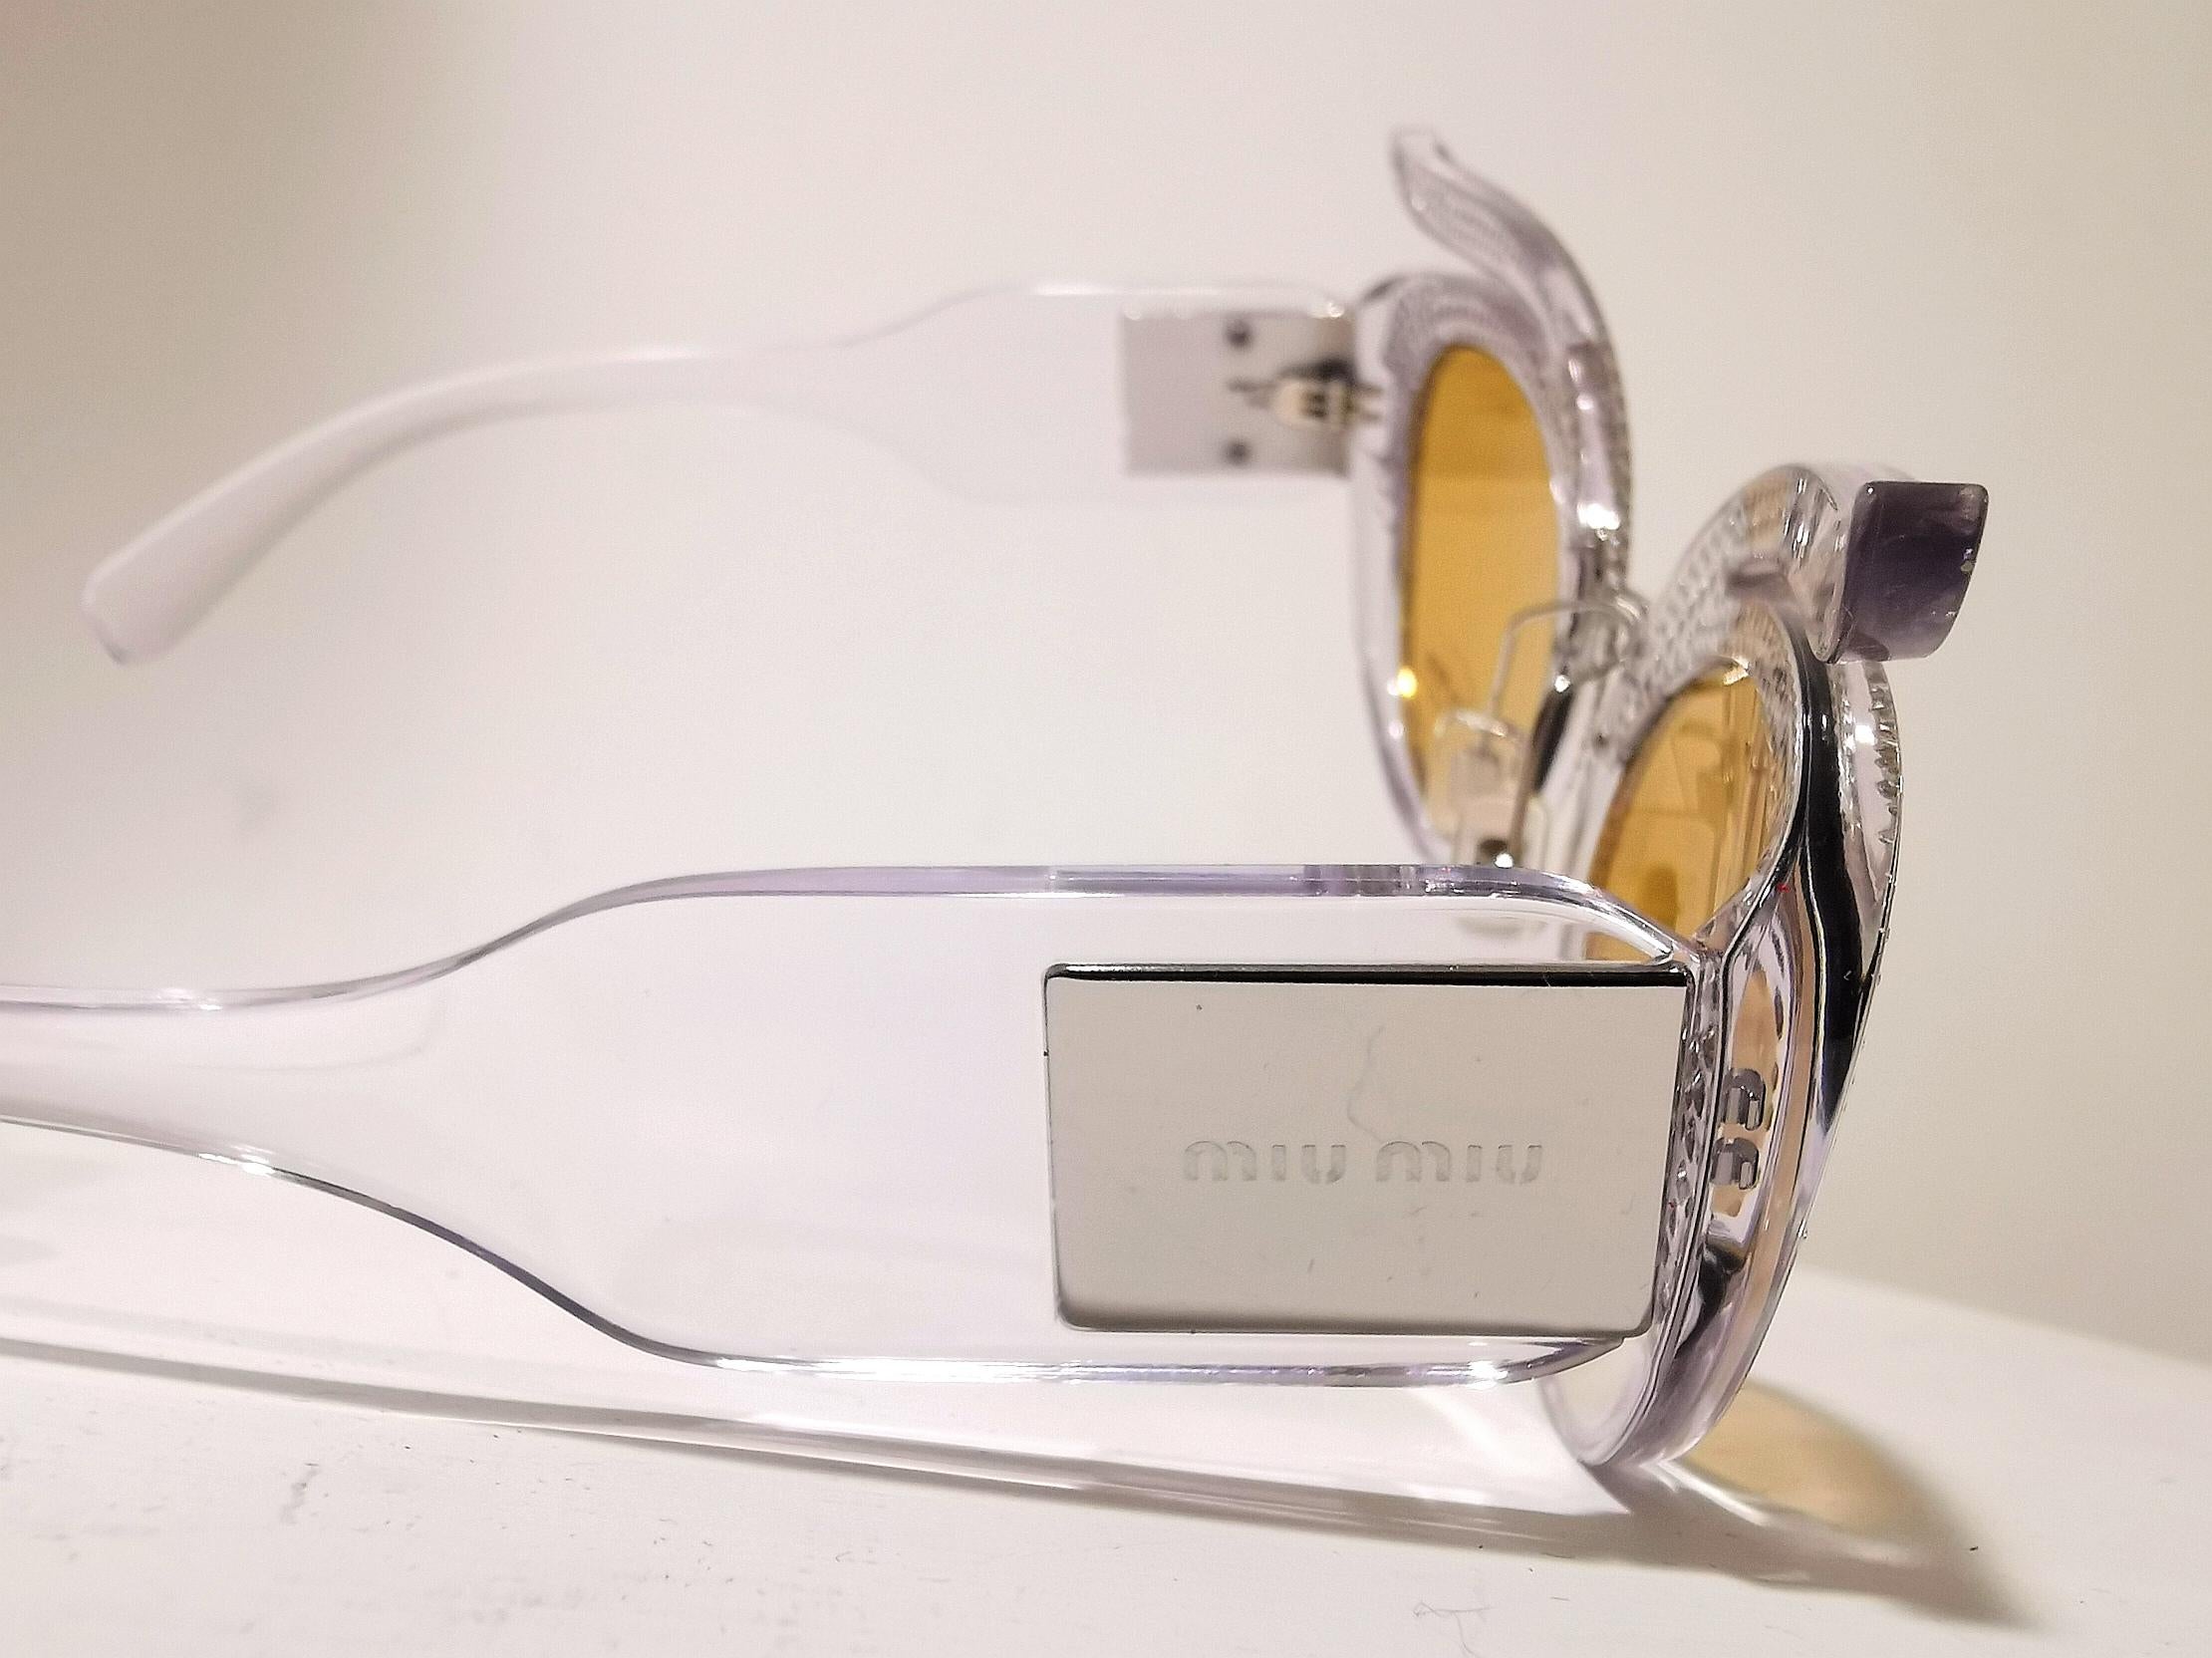 Miu Miu Sunglasses Eyewear
New with original tabs, pack and packaging.